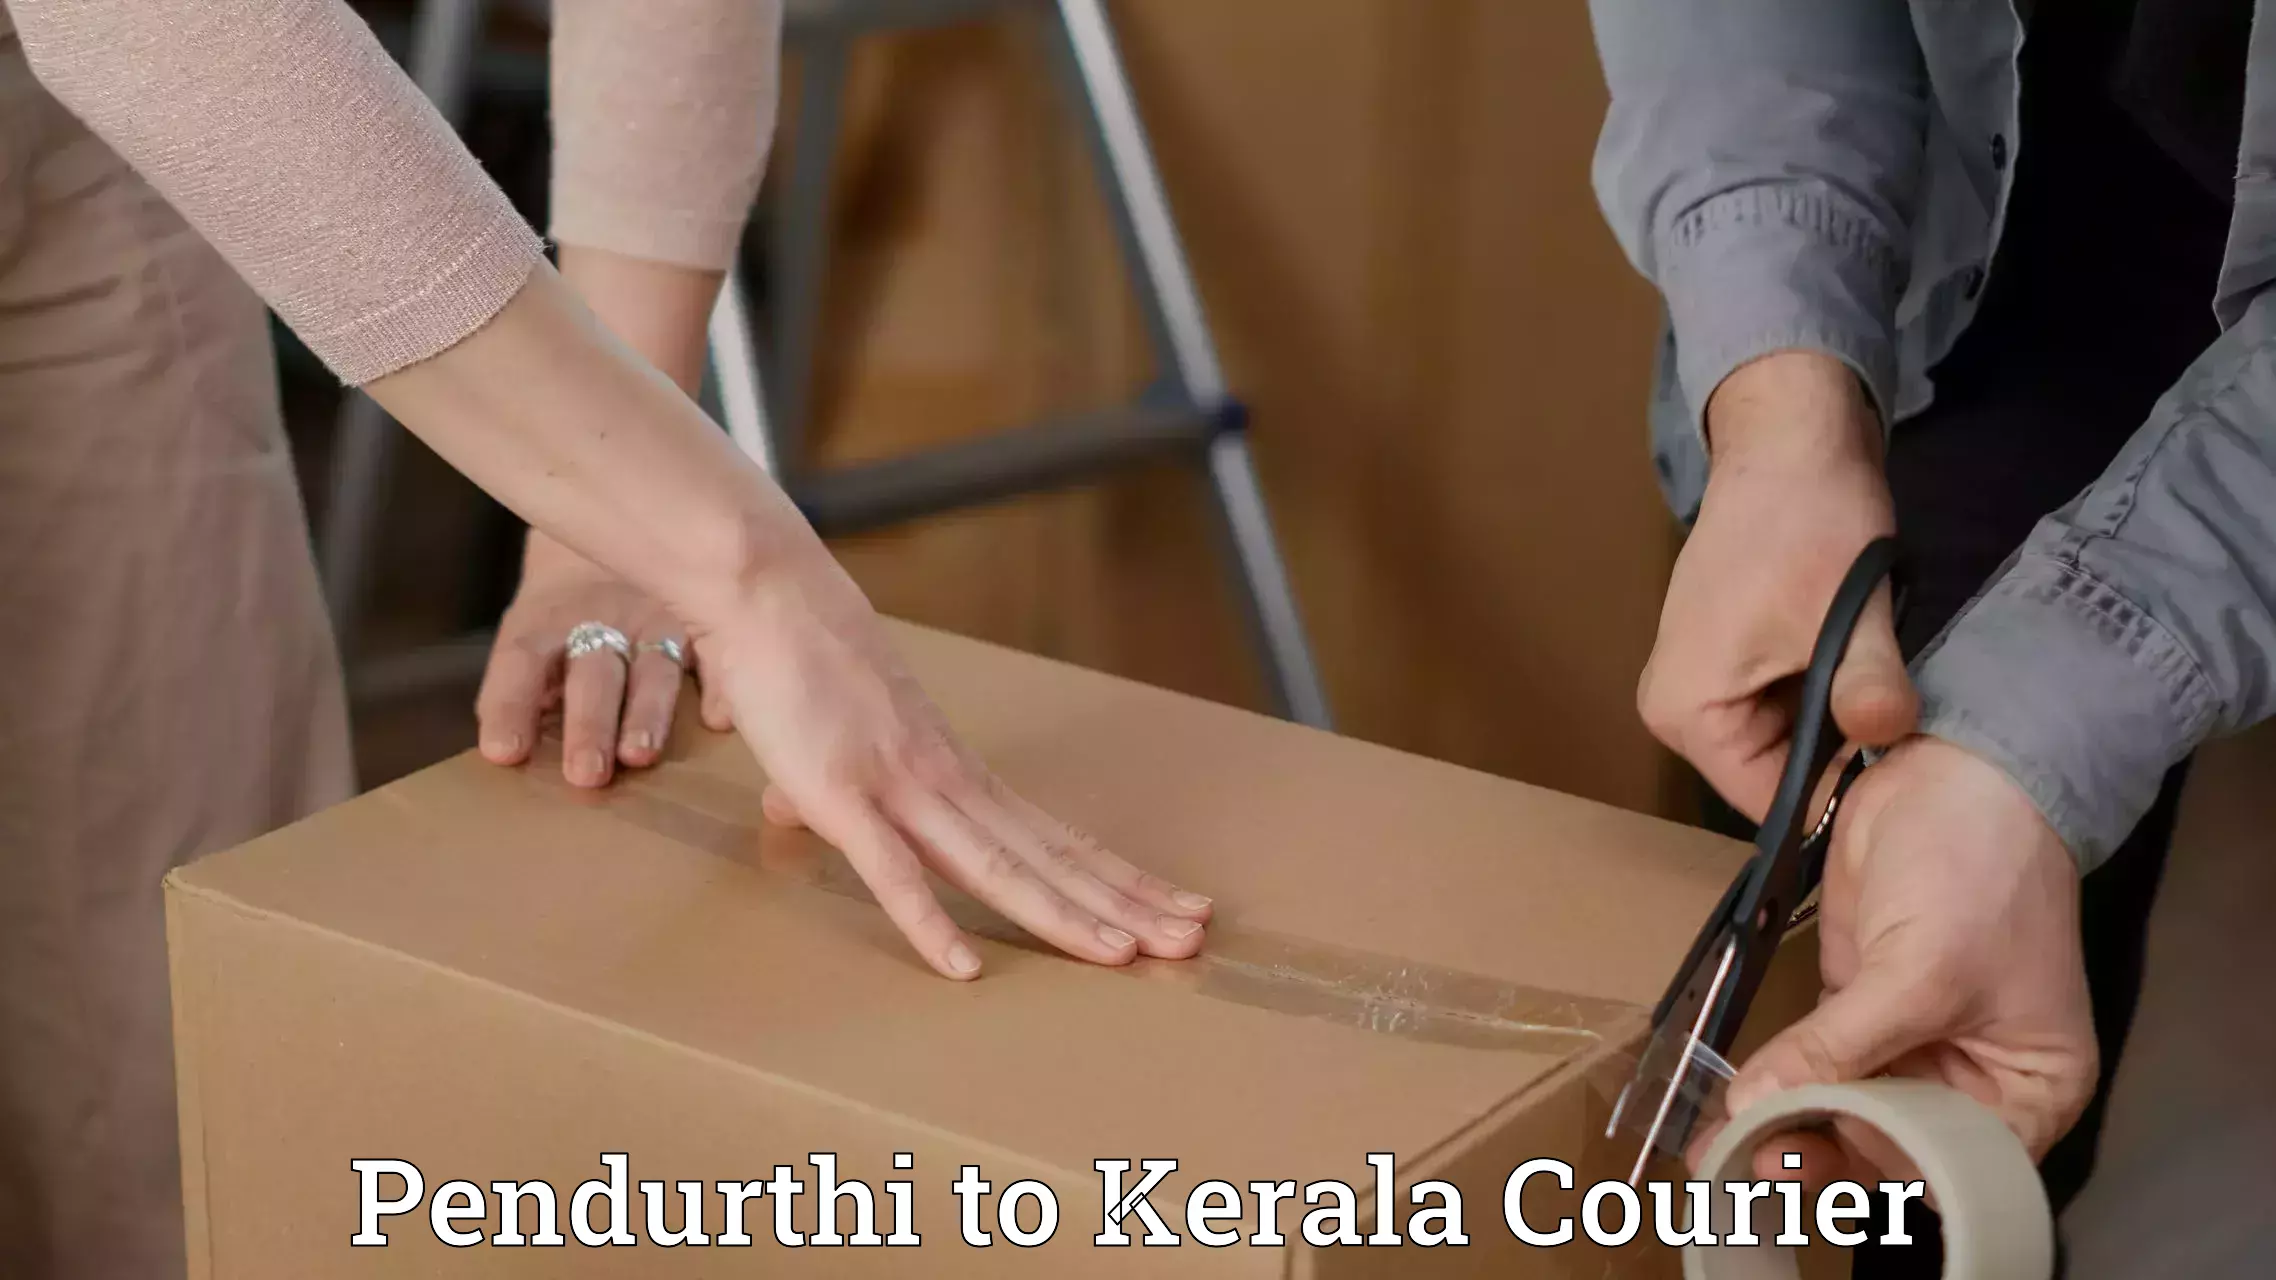 Easy return solutions Pendurthi to Kerala